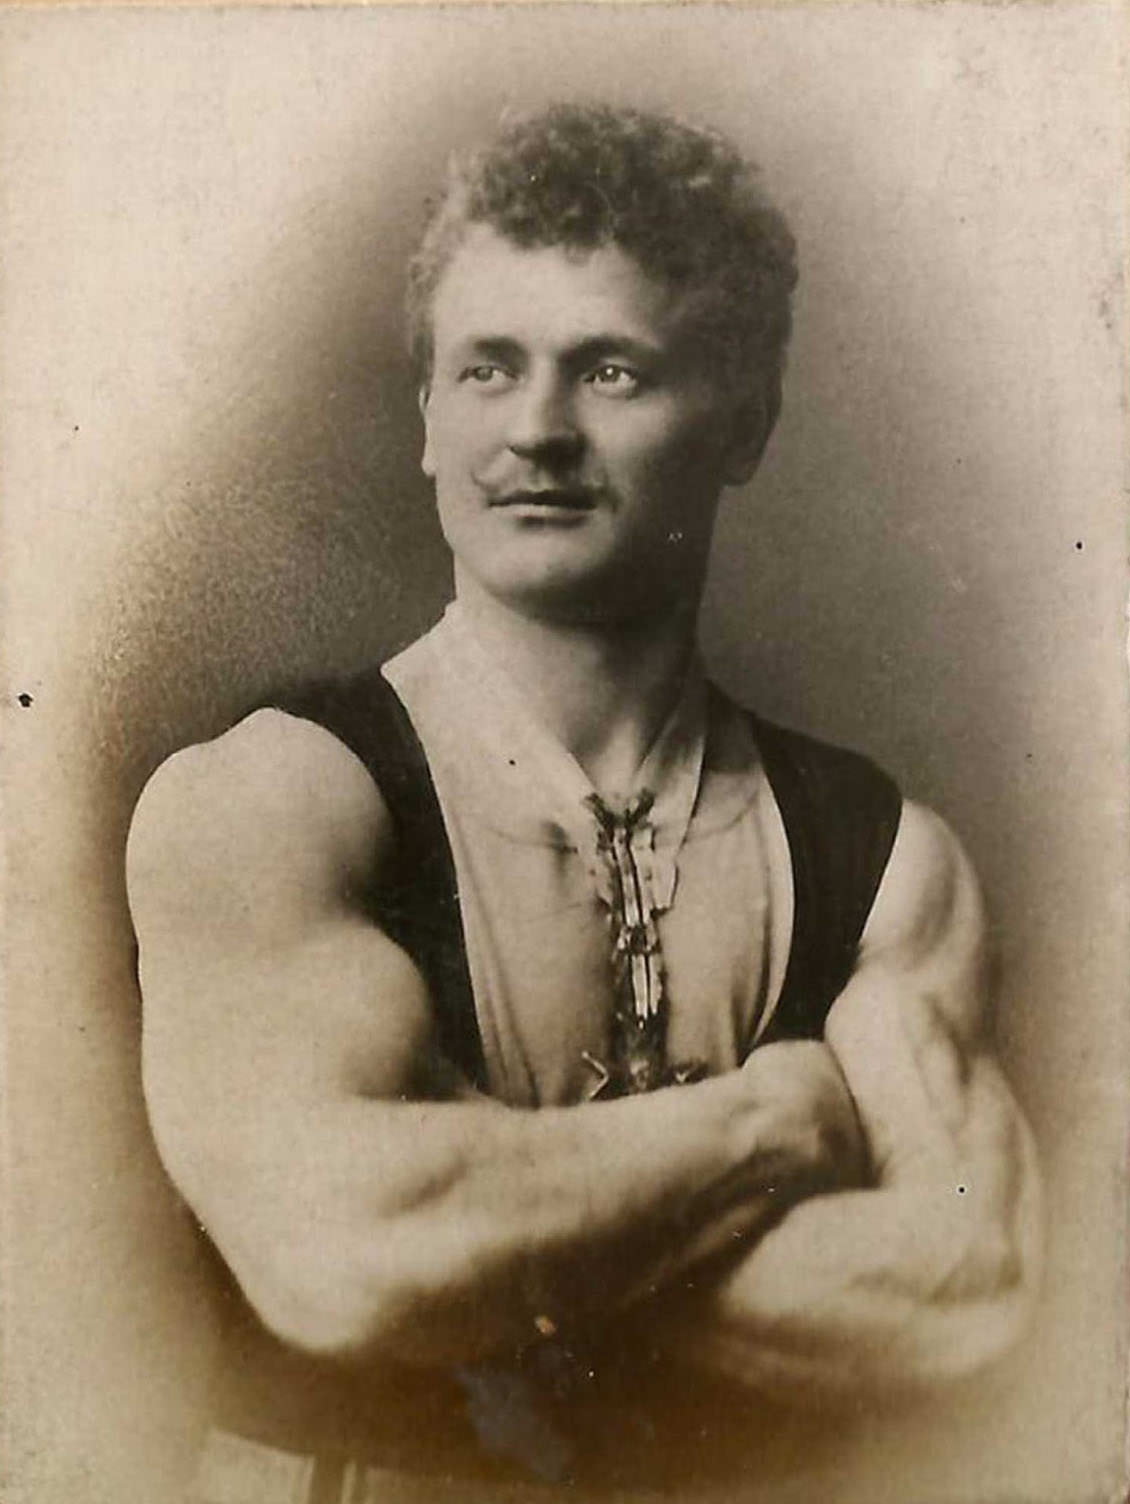 Eugen Sandow showing his guns.